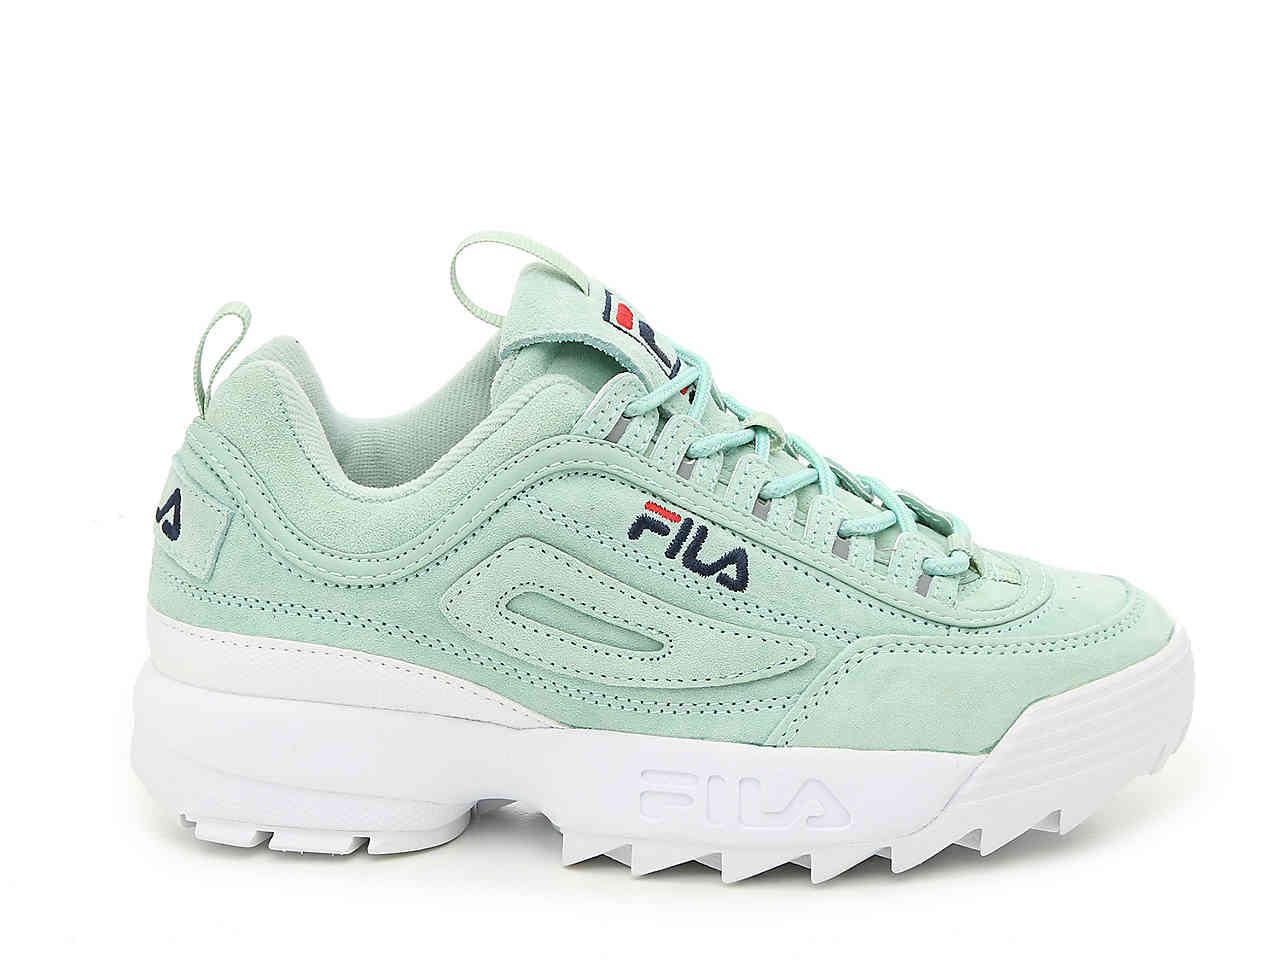 Fila Suede Disruptor Ii Premium Sneaker in Mint Green (Green) - Lyst